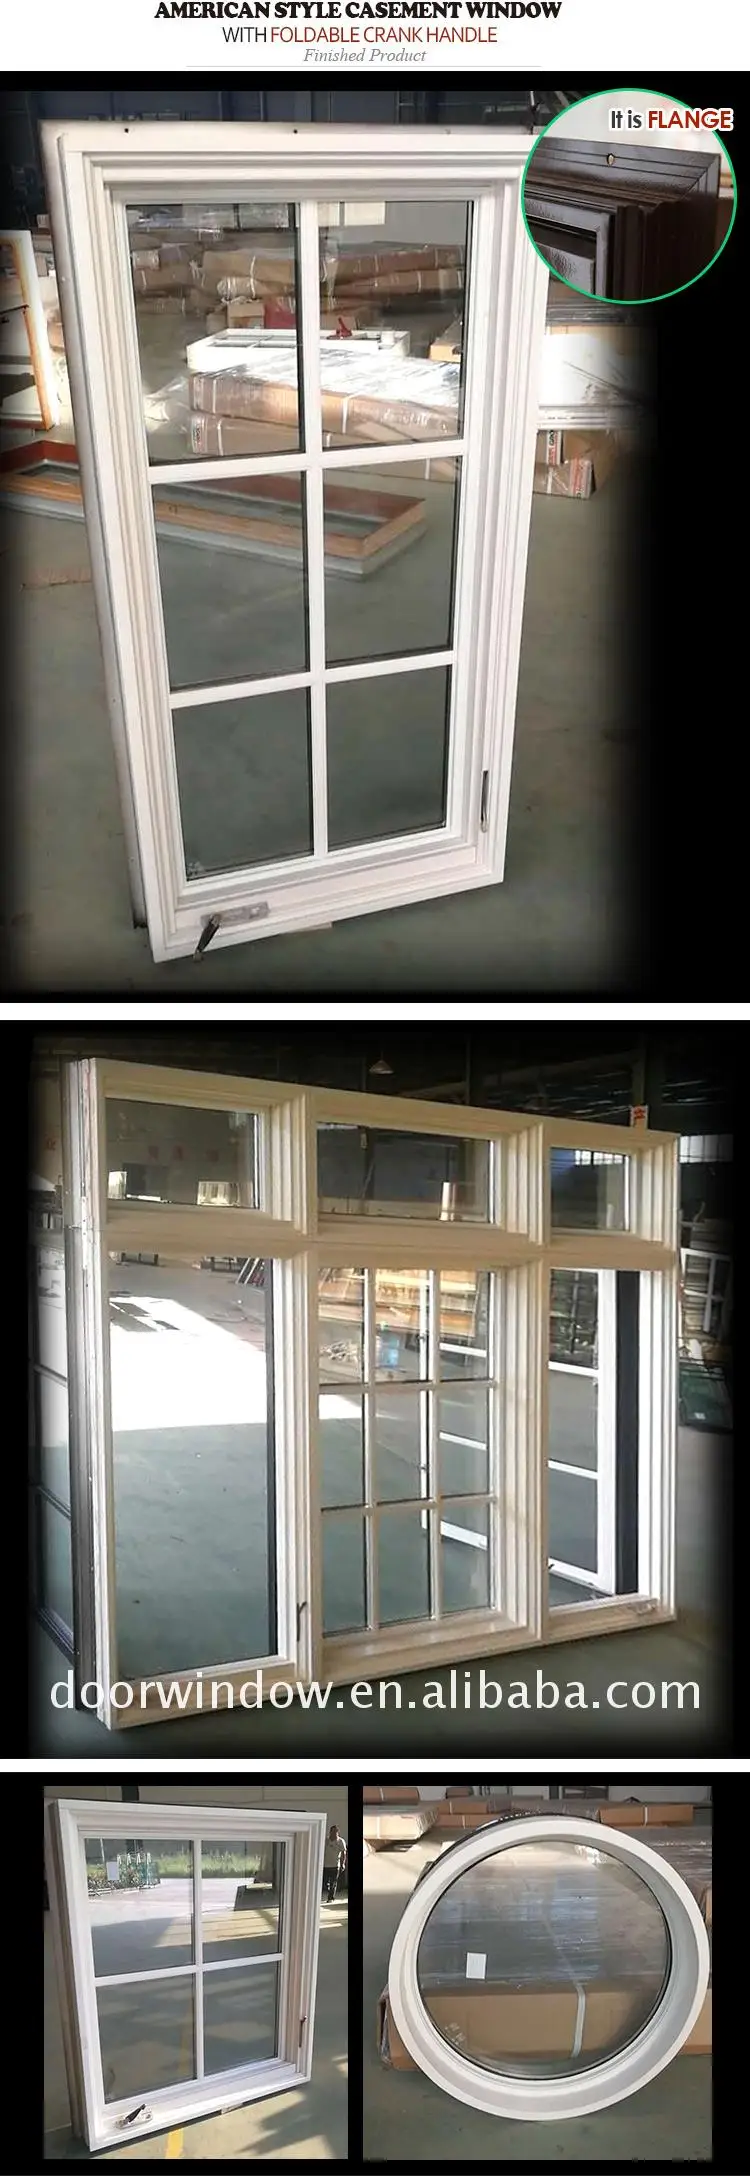 New hot selling products wooden window frames door models design